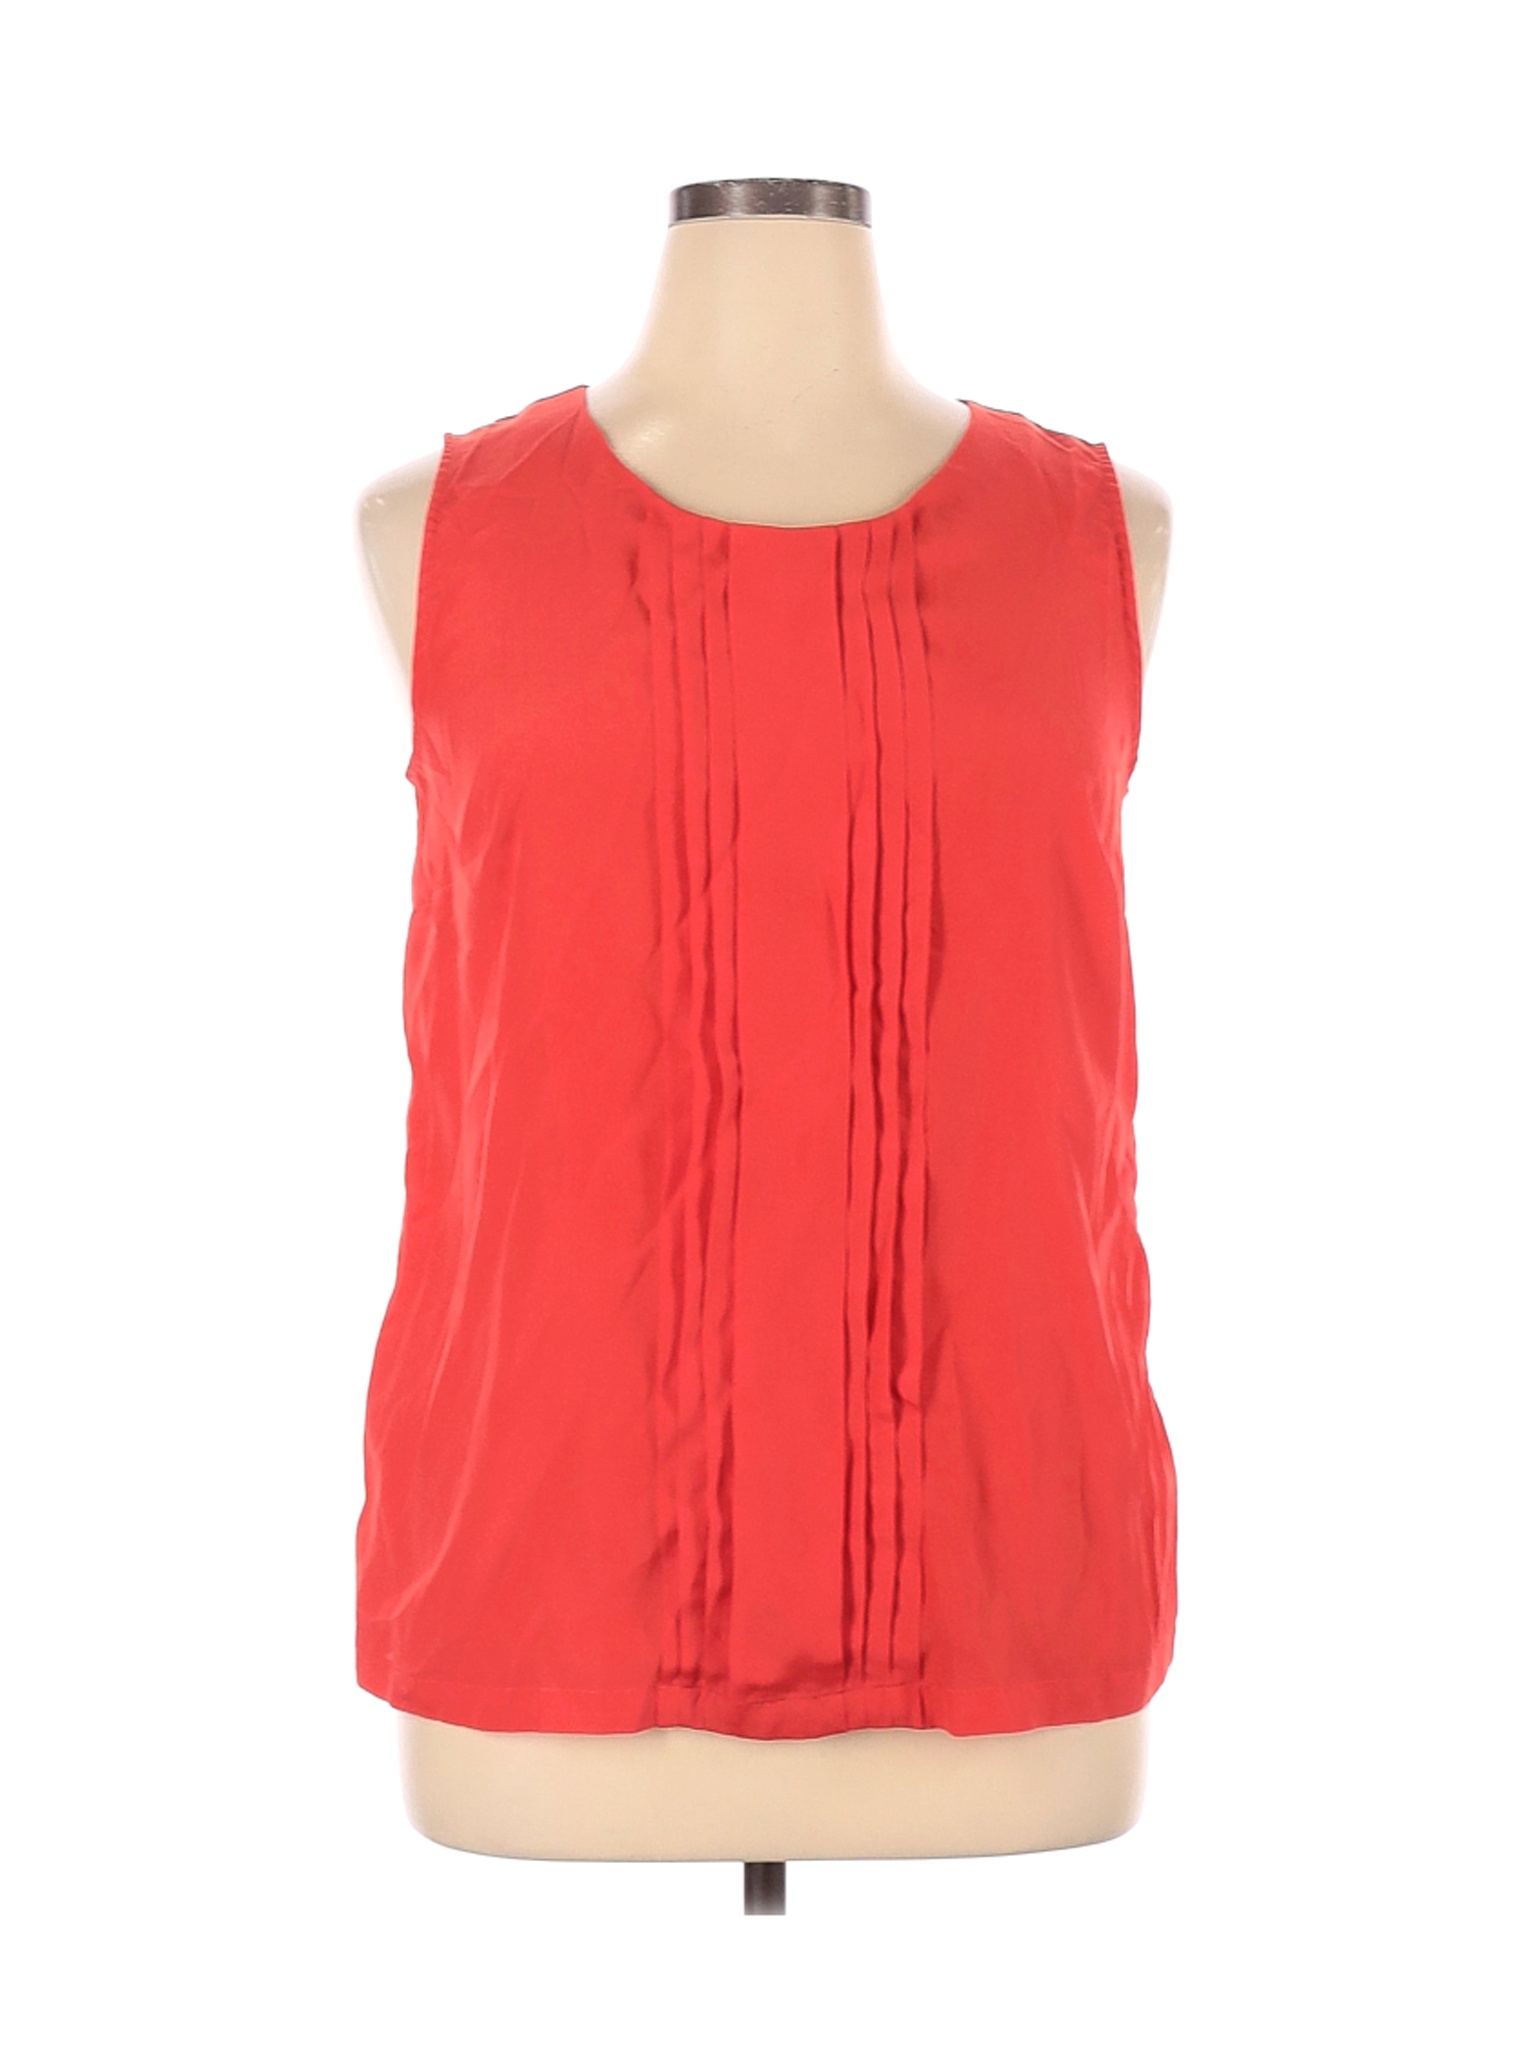 Merona Women Pink Sleeveless Blouse XL | eBay